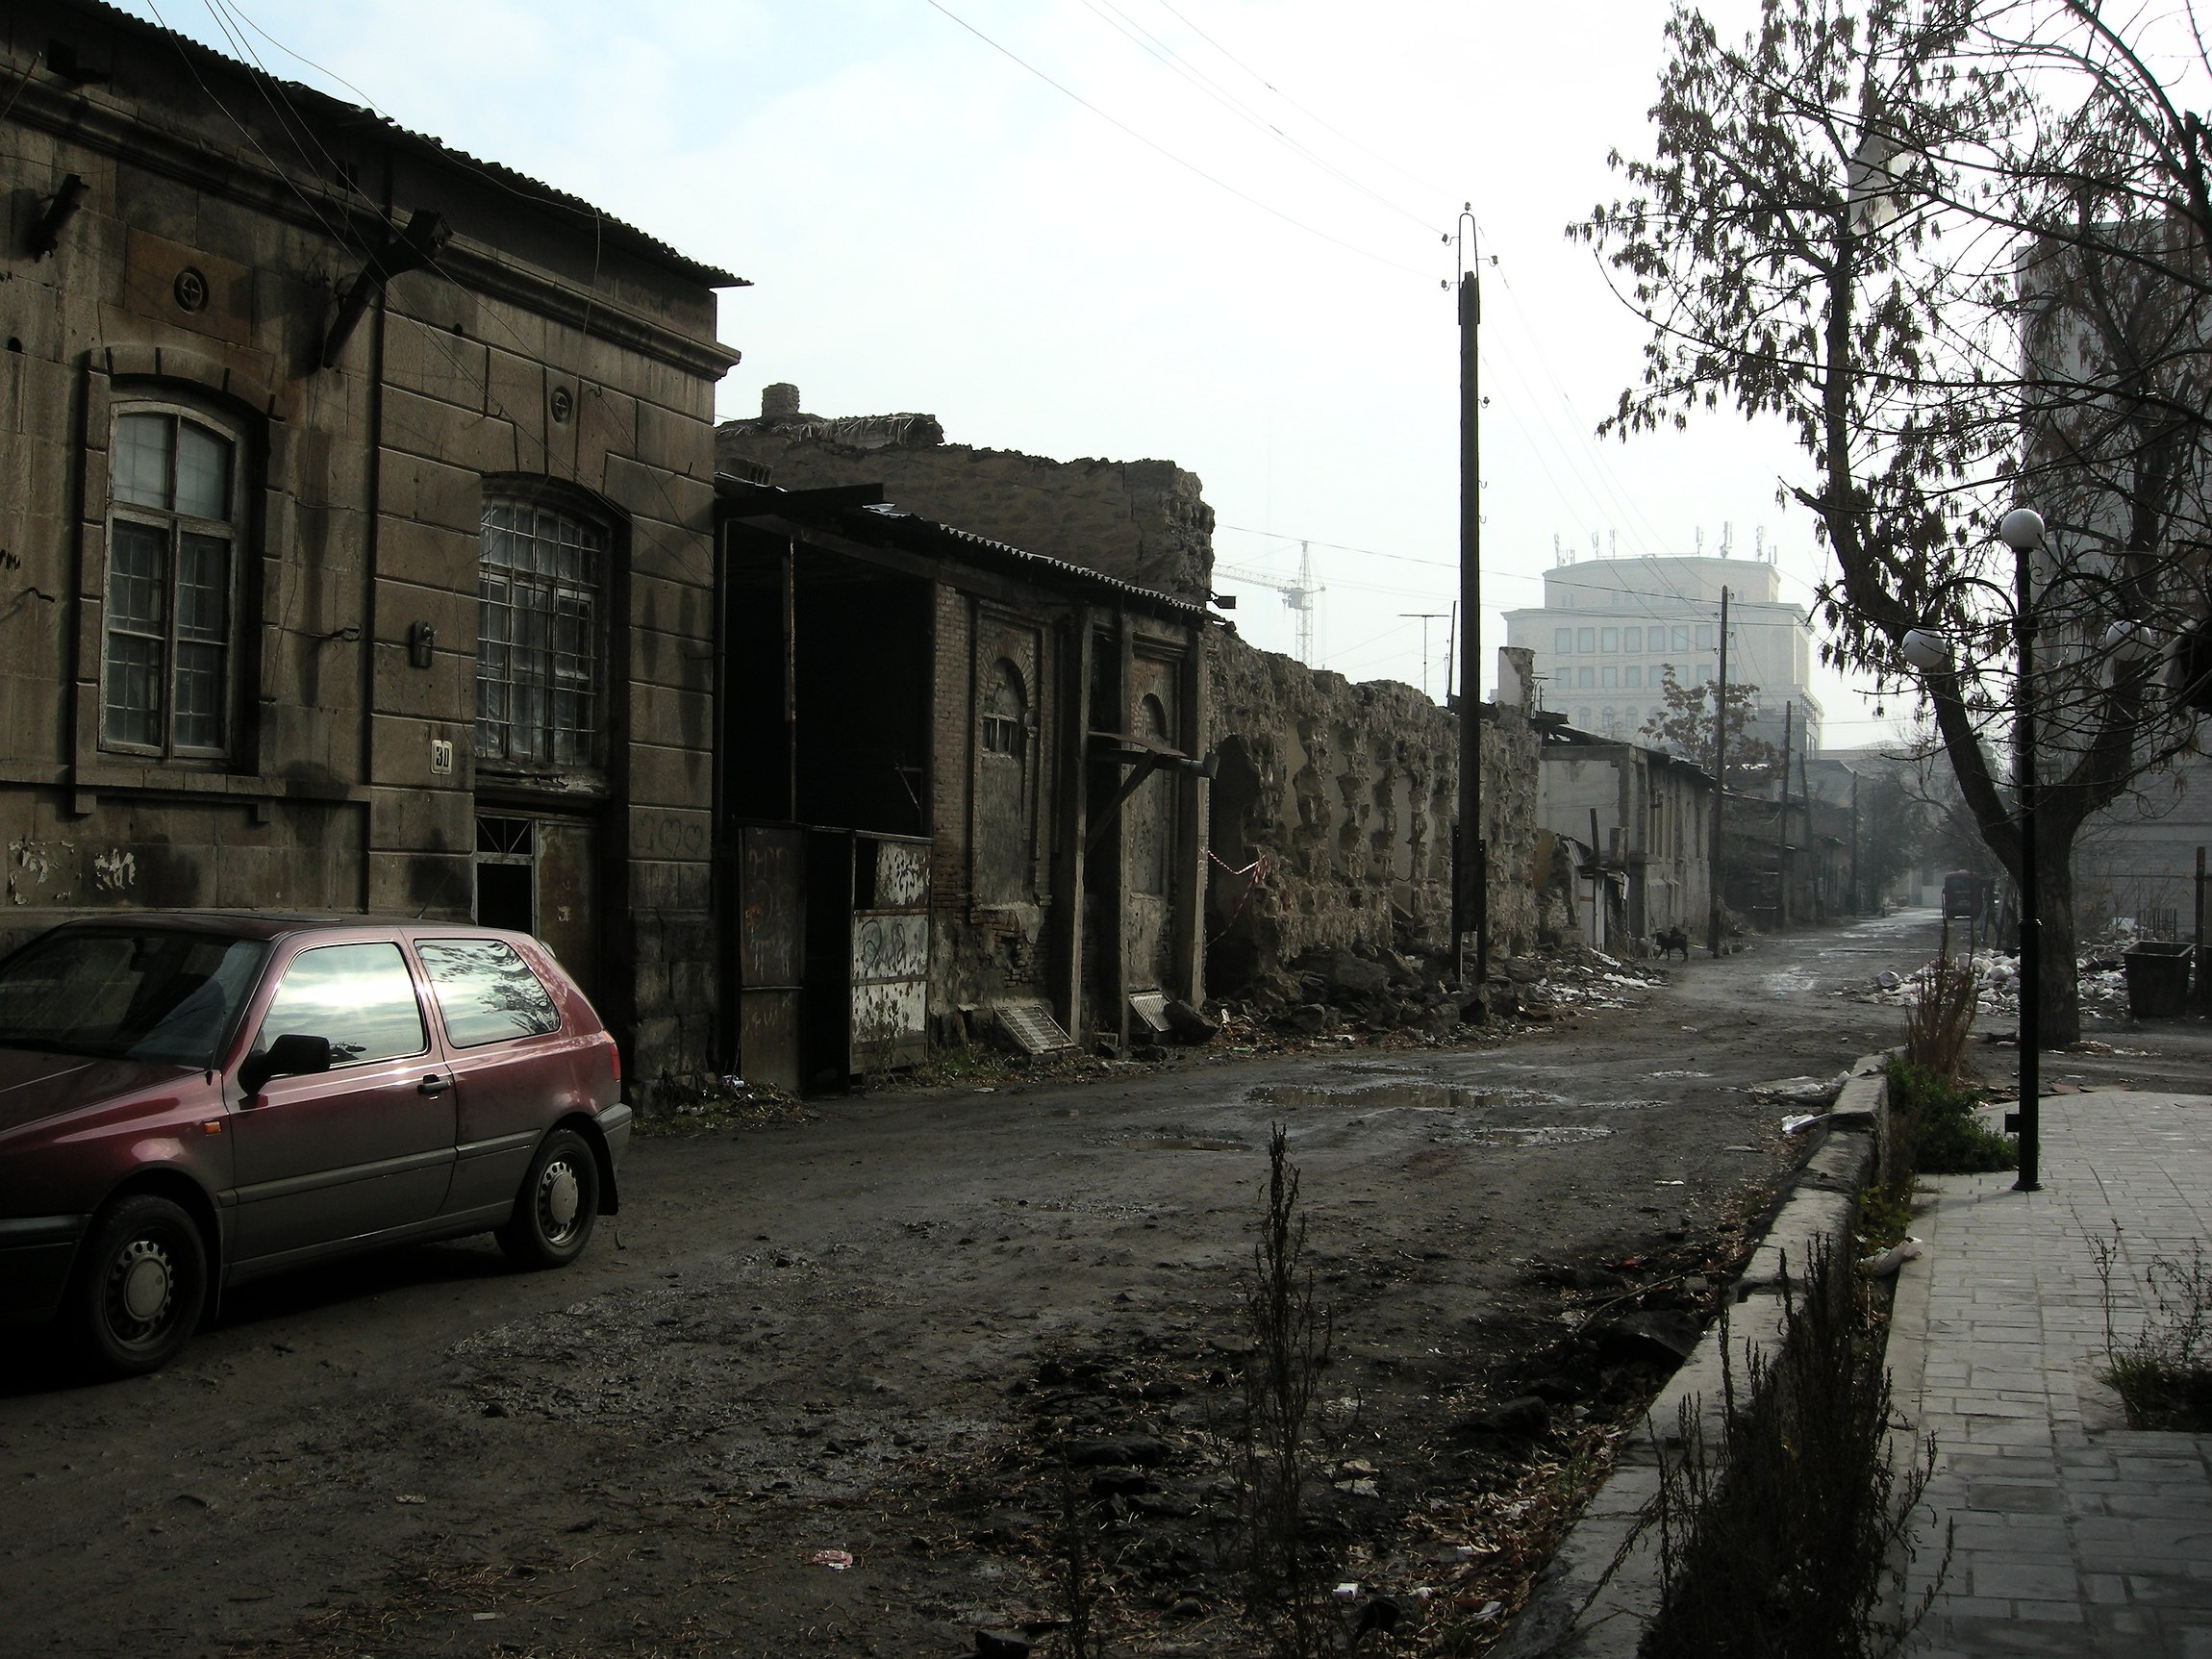 Ереван квартал. Улица Бюзанда в Ереване. Квартал старый Ереван. Ереван старый Северный проспект. Гетто Еревана.